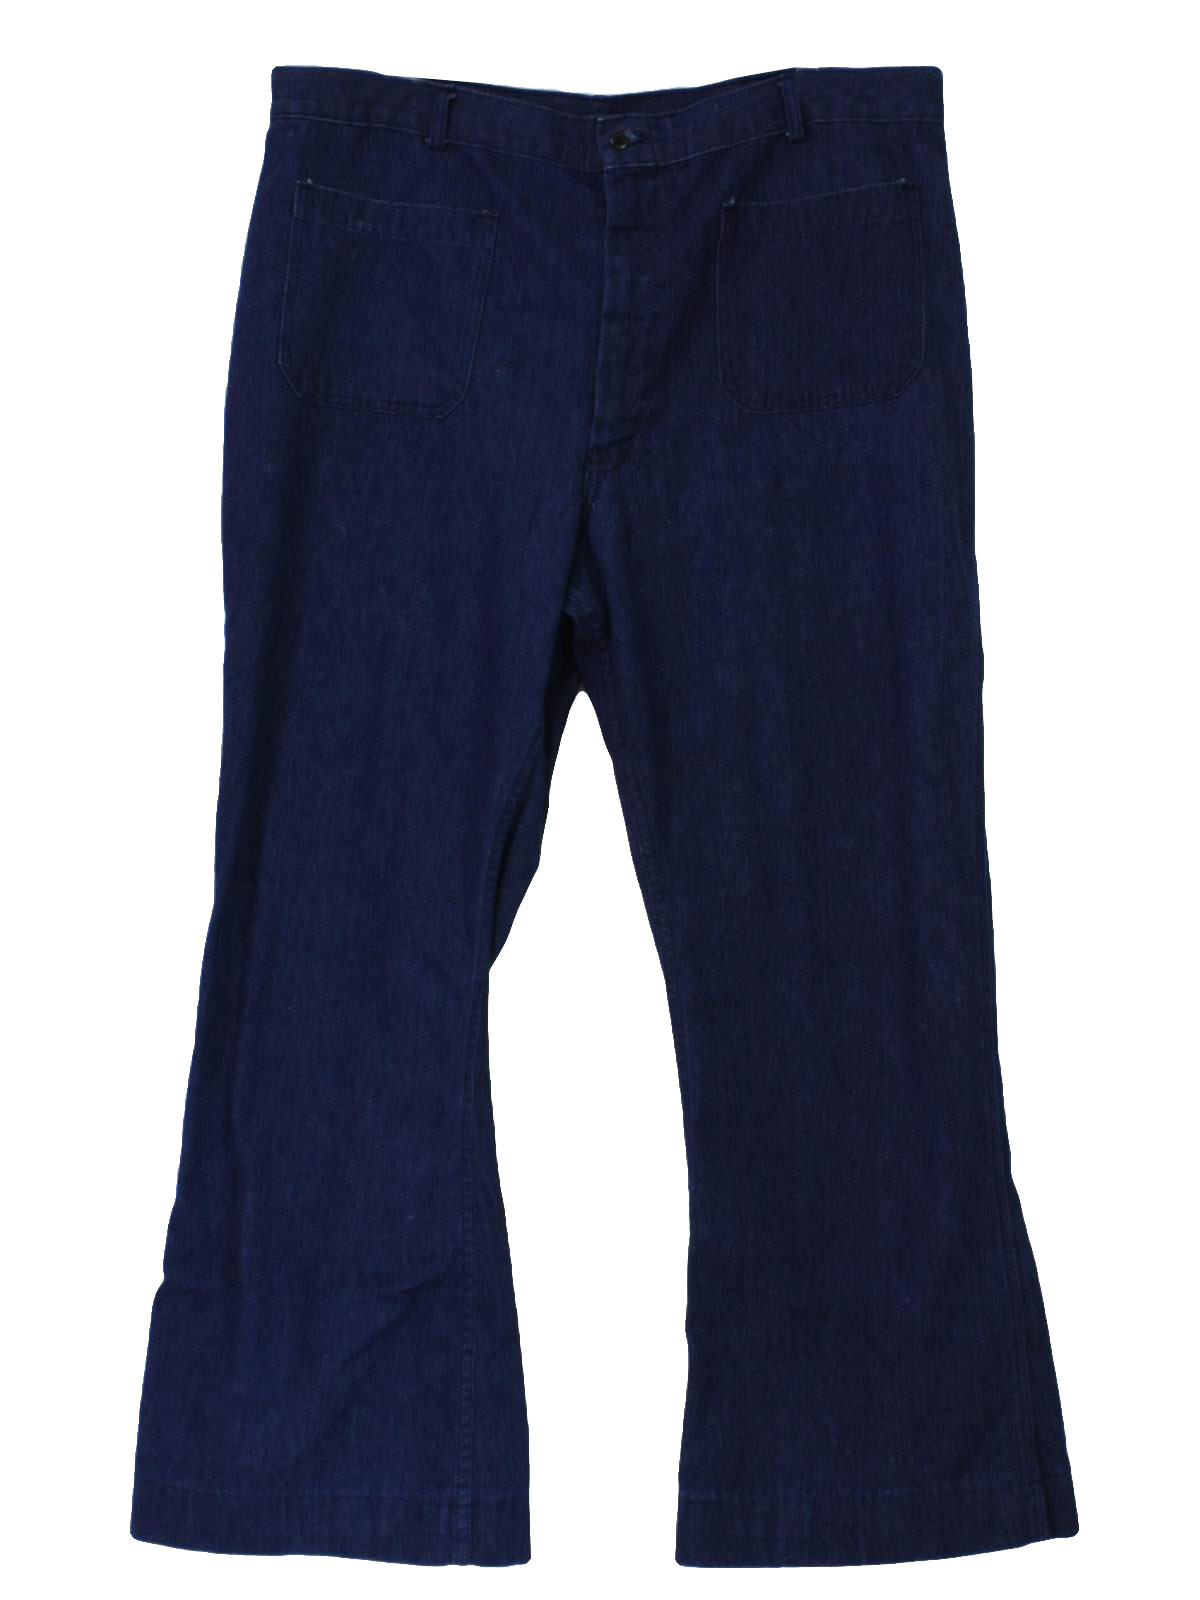 1970's Retro Bellbottom Pants: 70s -Utility Trousers- Mens dark blue ...